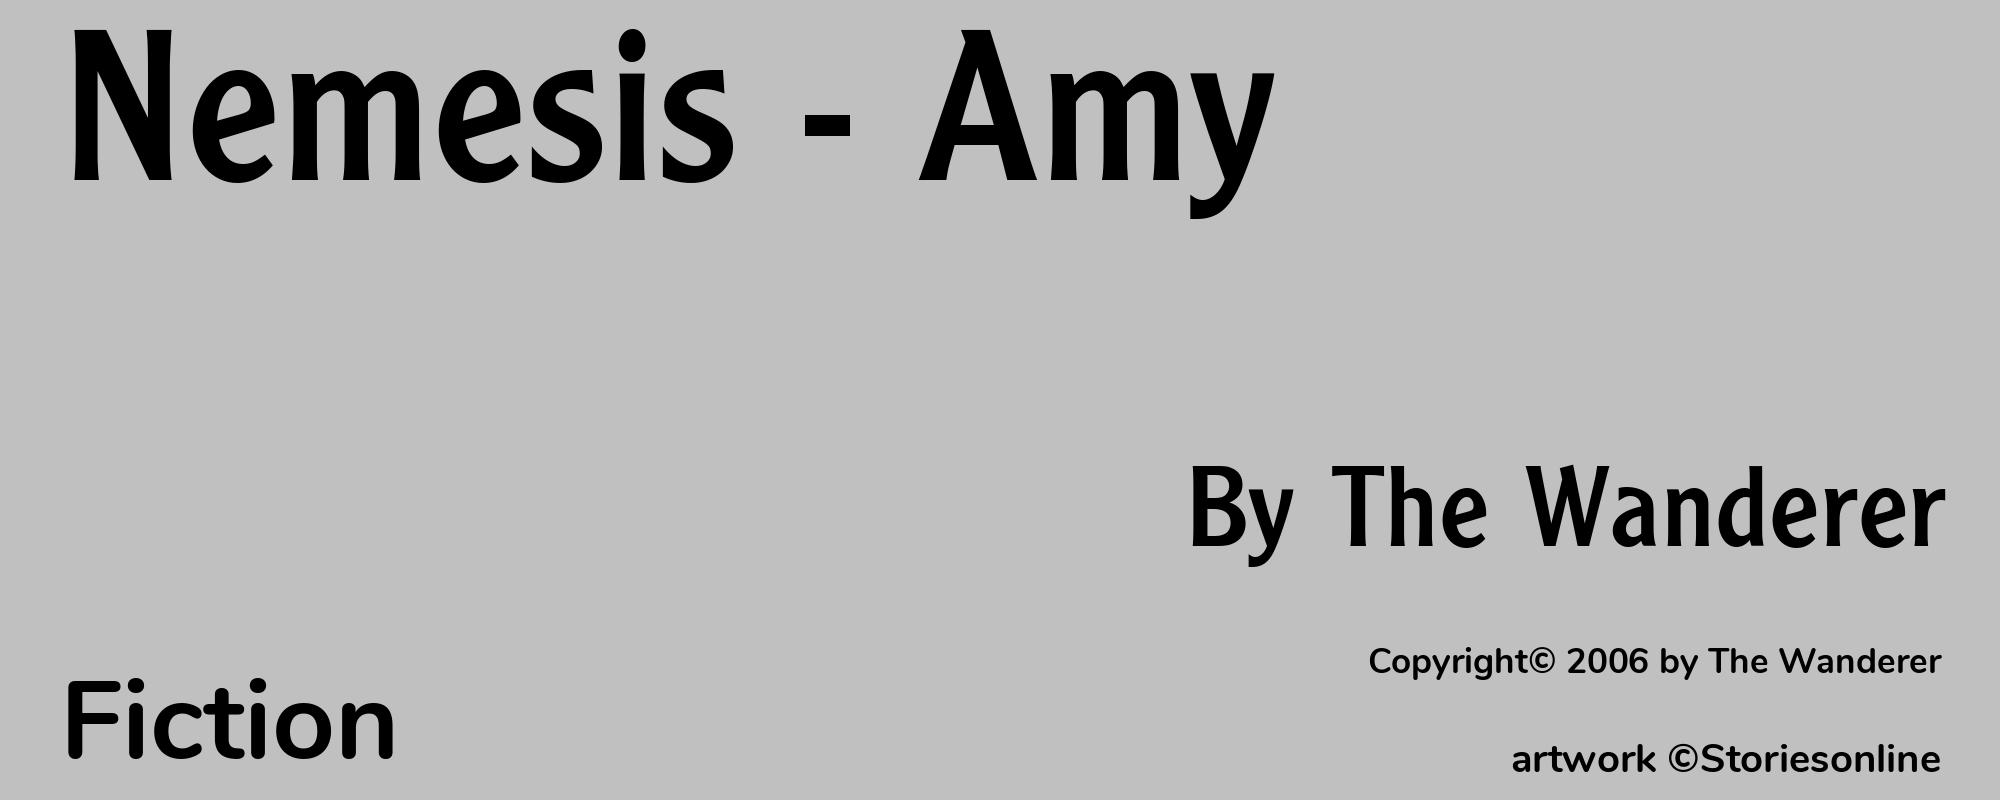 Nemesis - Amy - Cover